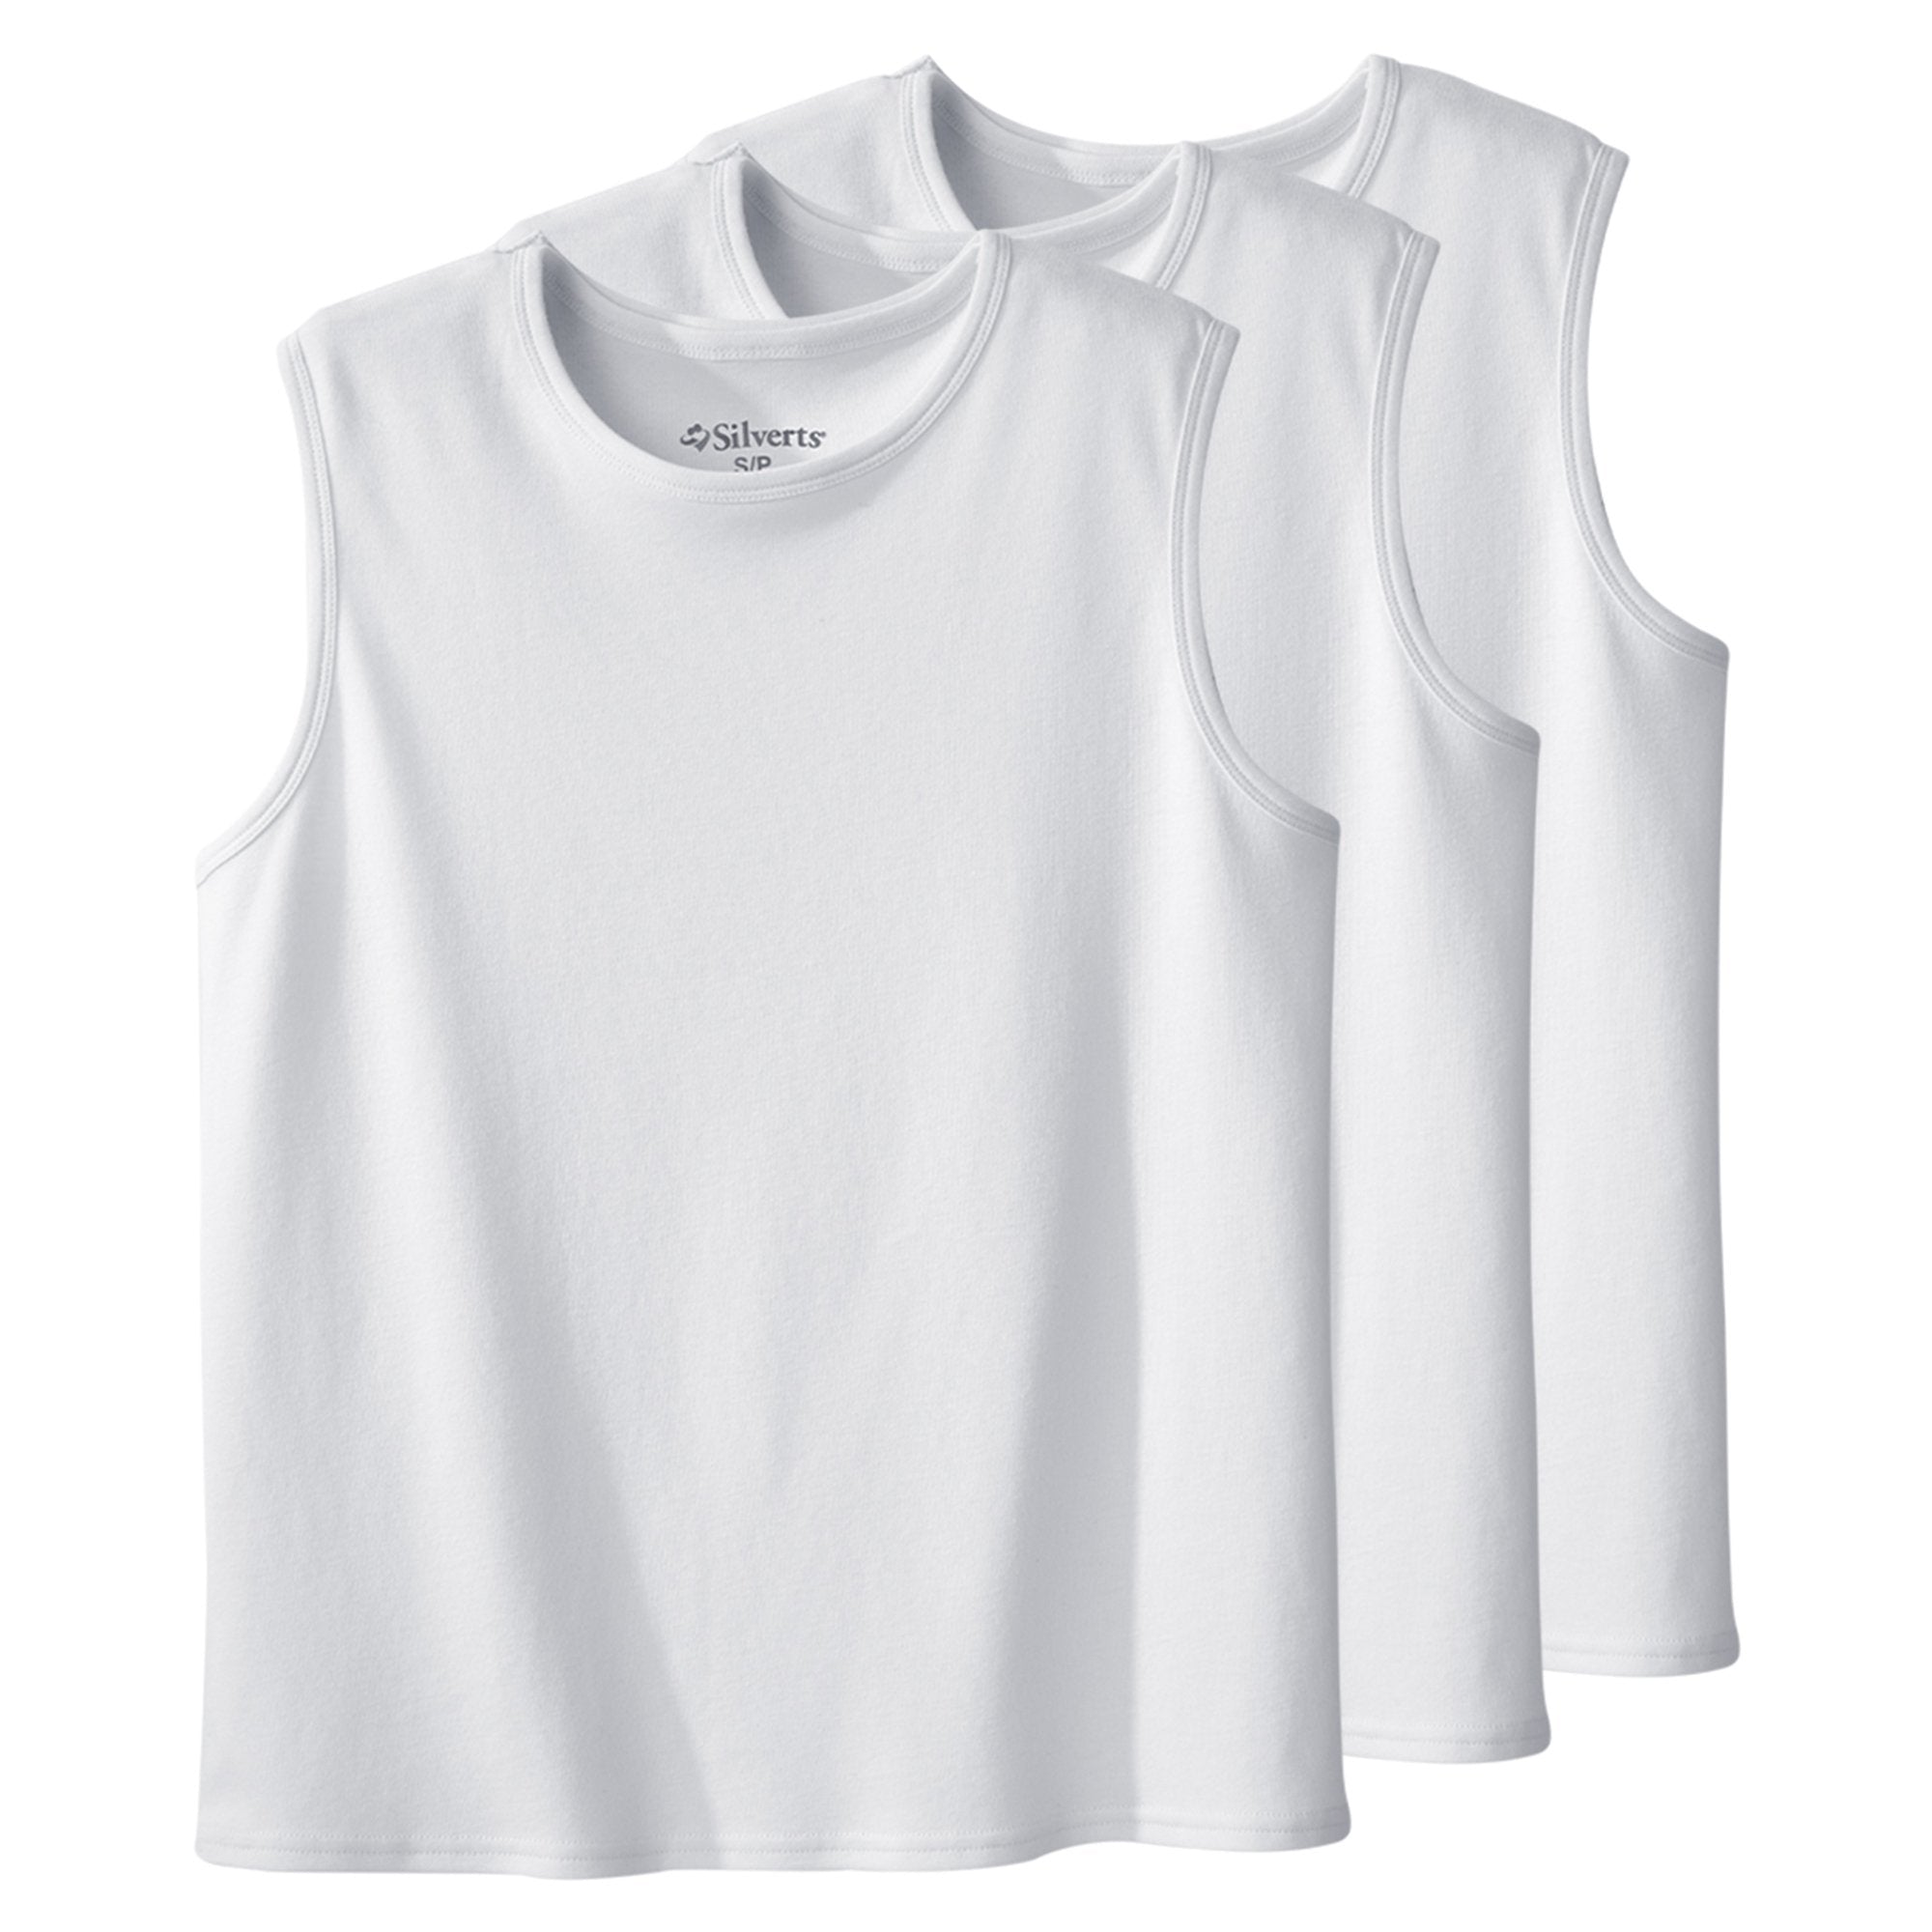 Adaptive Undershirt Silverts Small White Without Pockets Sleeveless Female